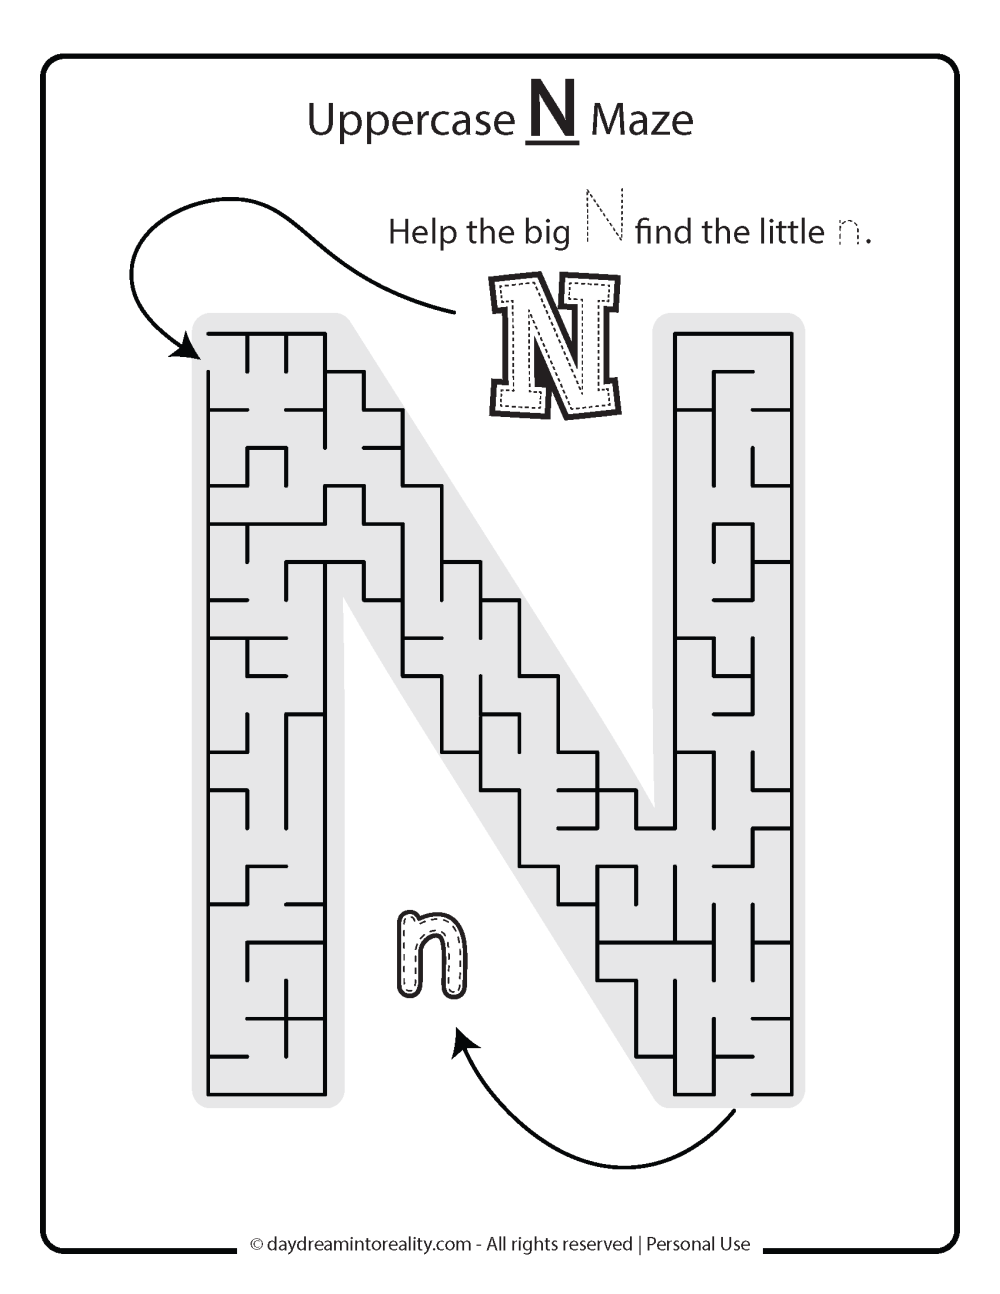 Uppercase "N" Maze Free Printable